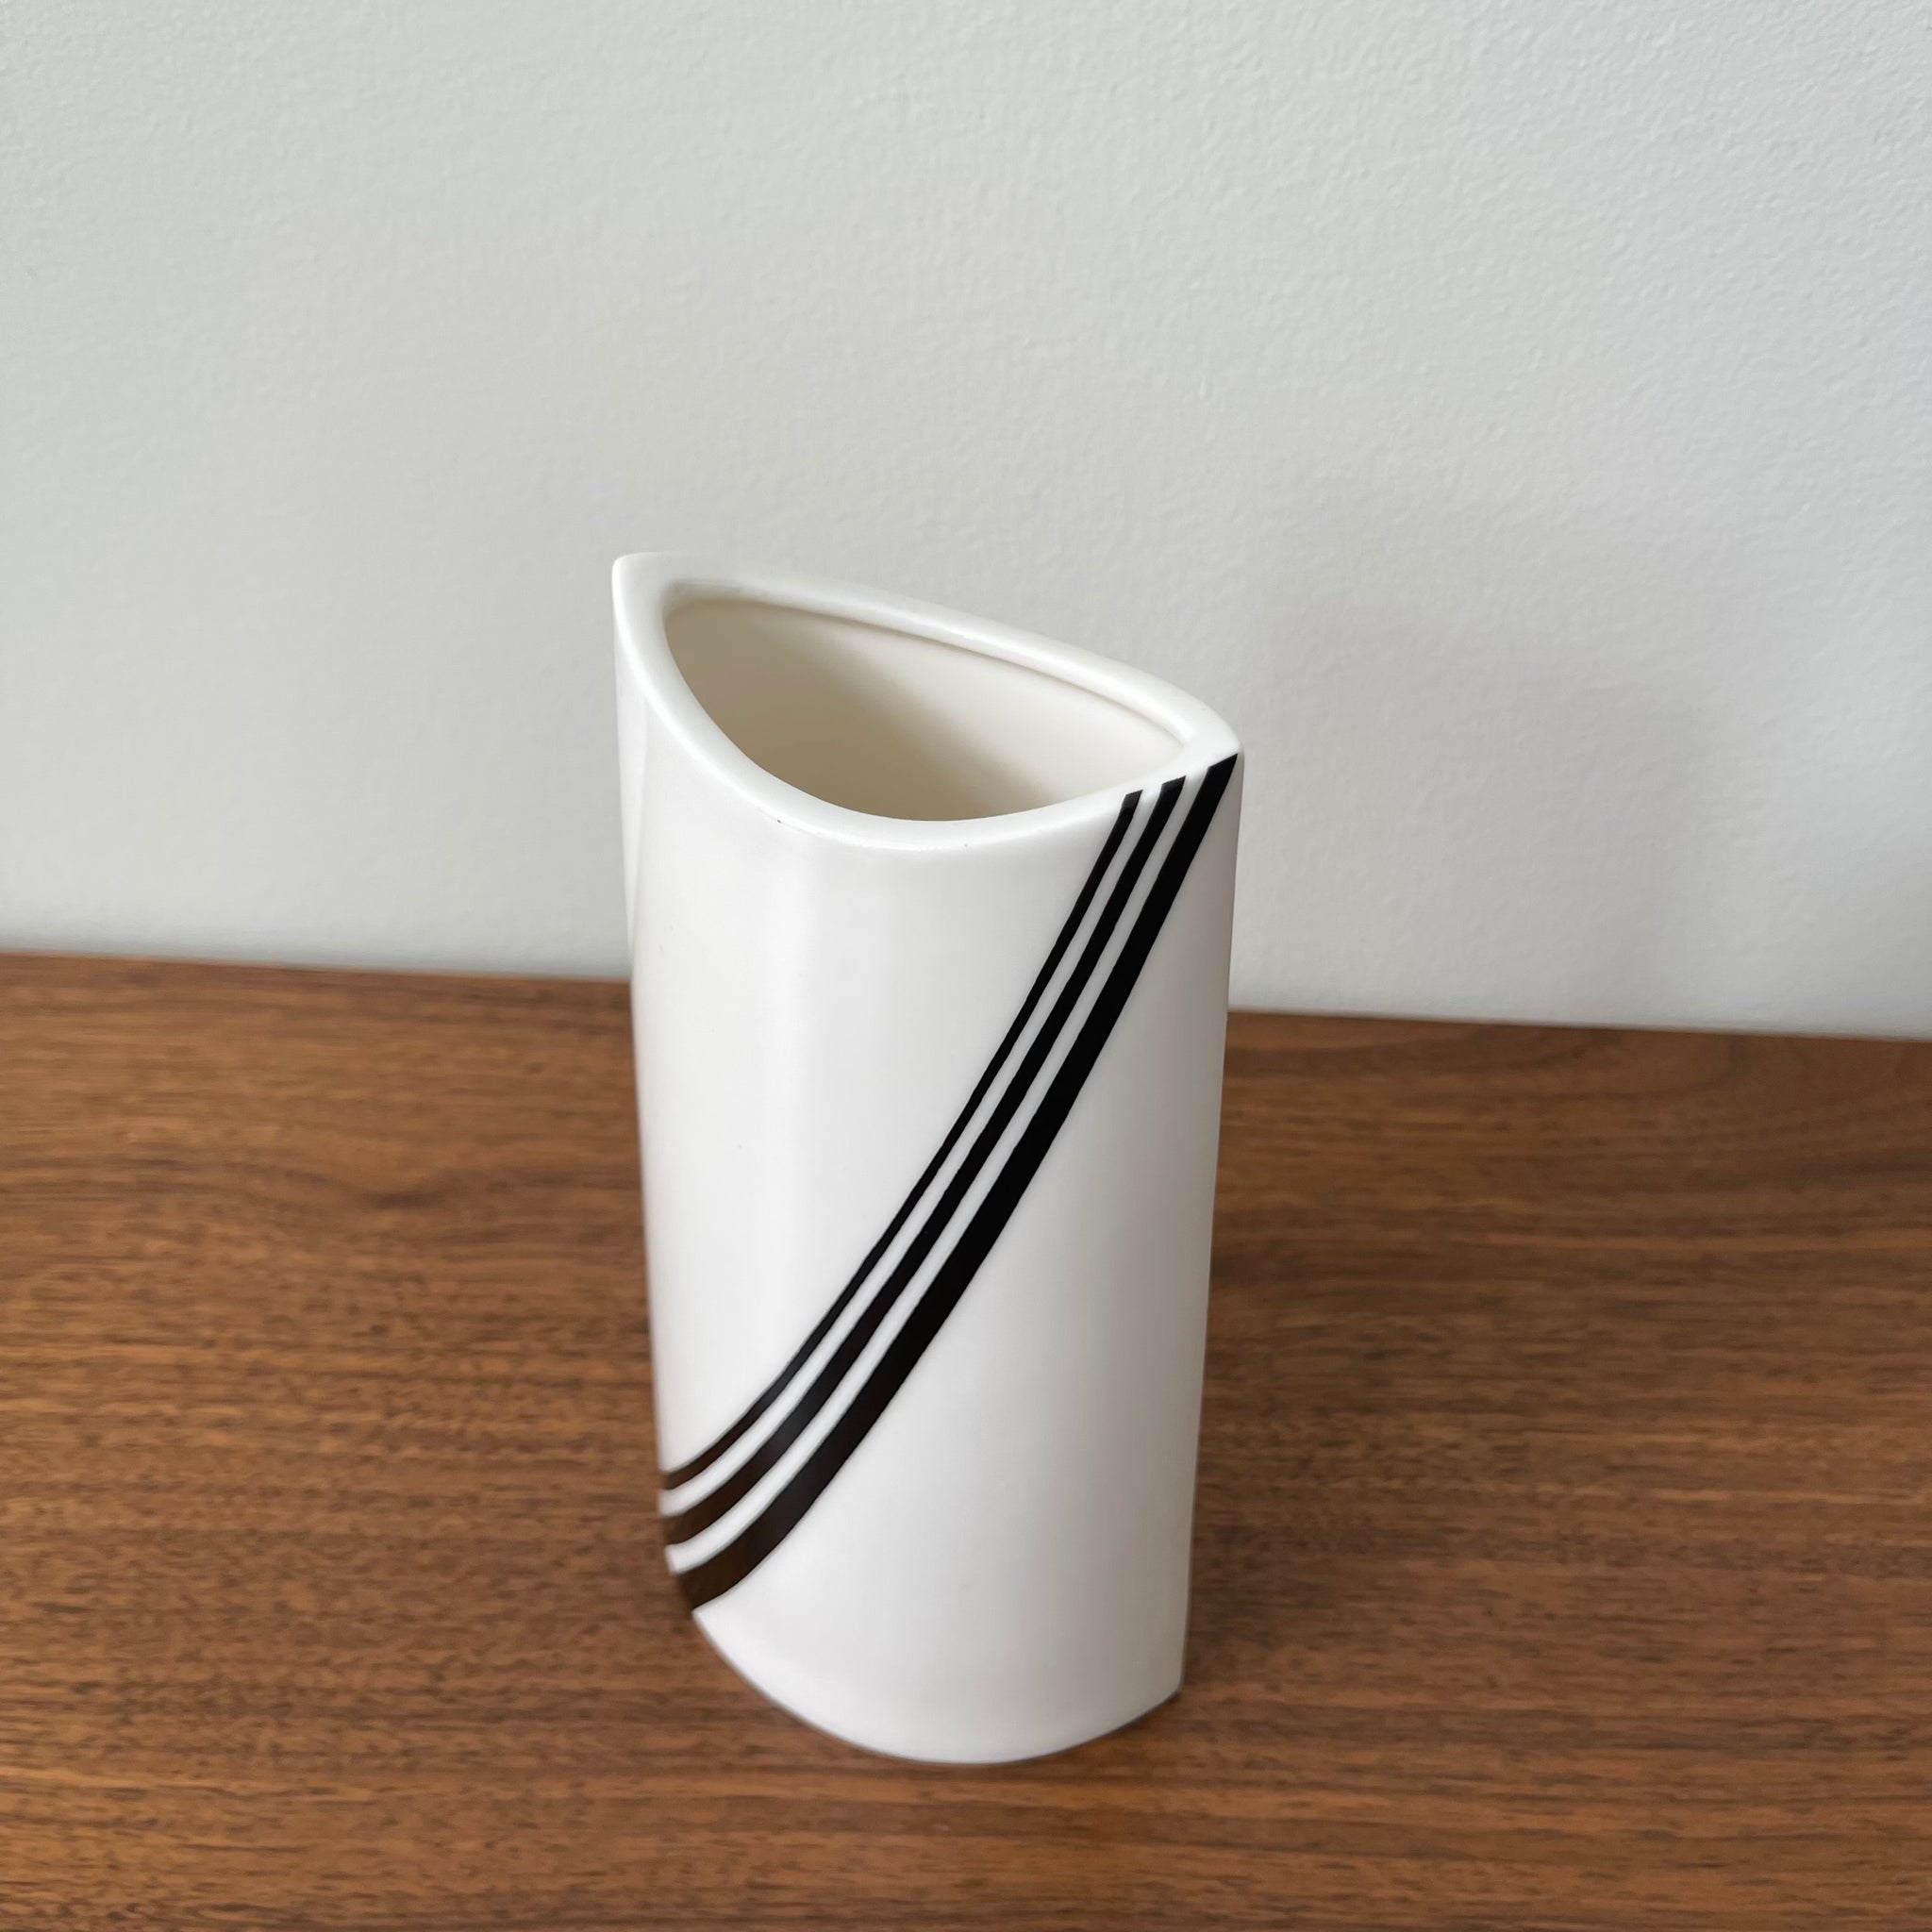 Vintage Japanese Ceramic Vase